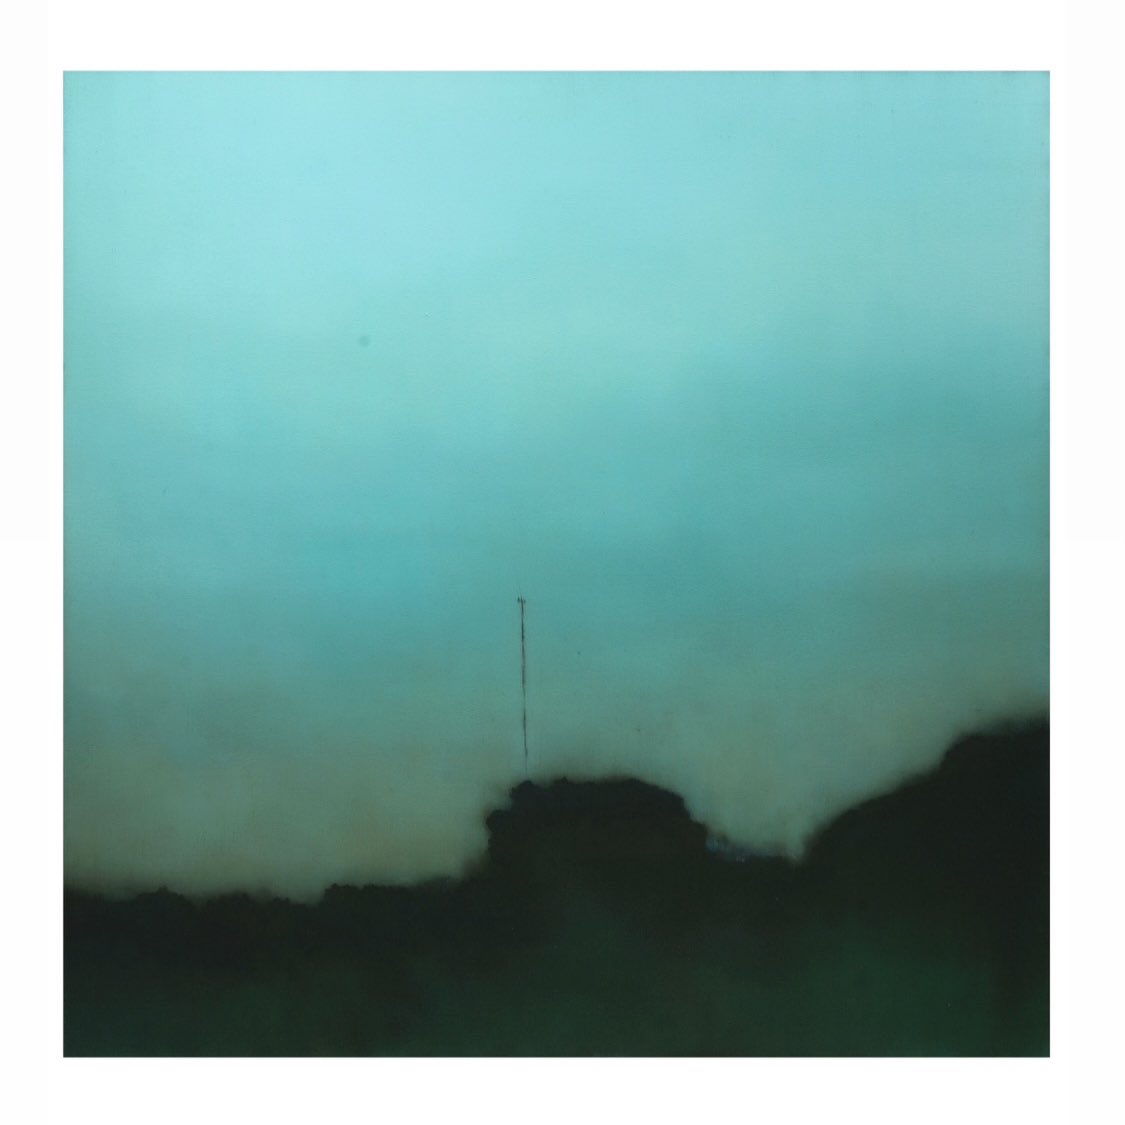 ‘Outpost’
Oil on canvas
120x120cm

#outpost #landscape #kerry #morninglandscape #coastallandscape